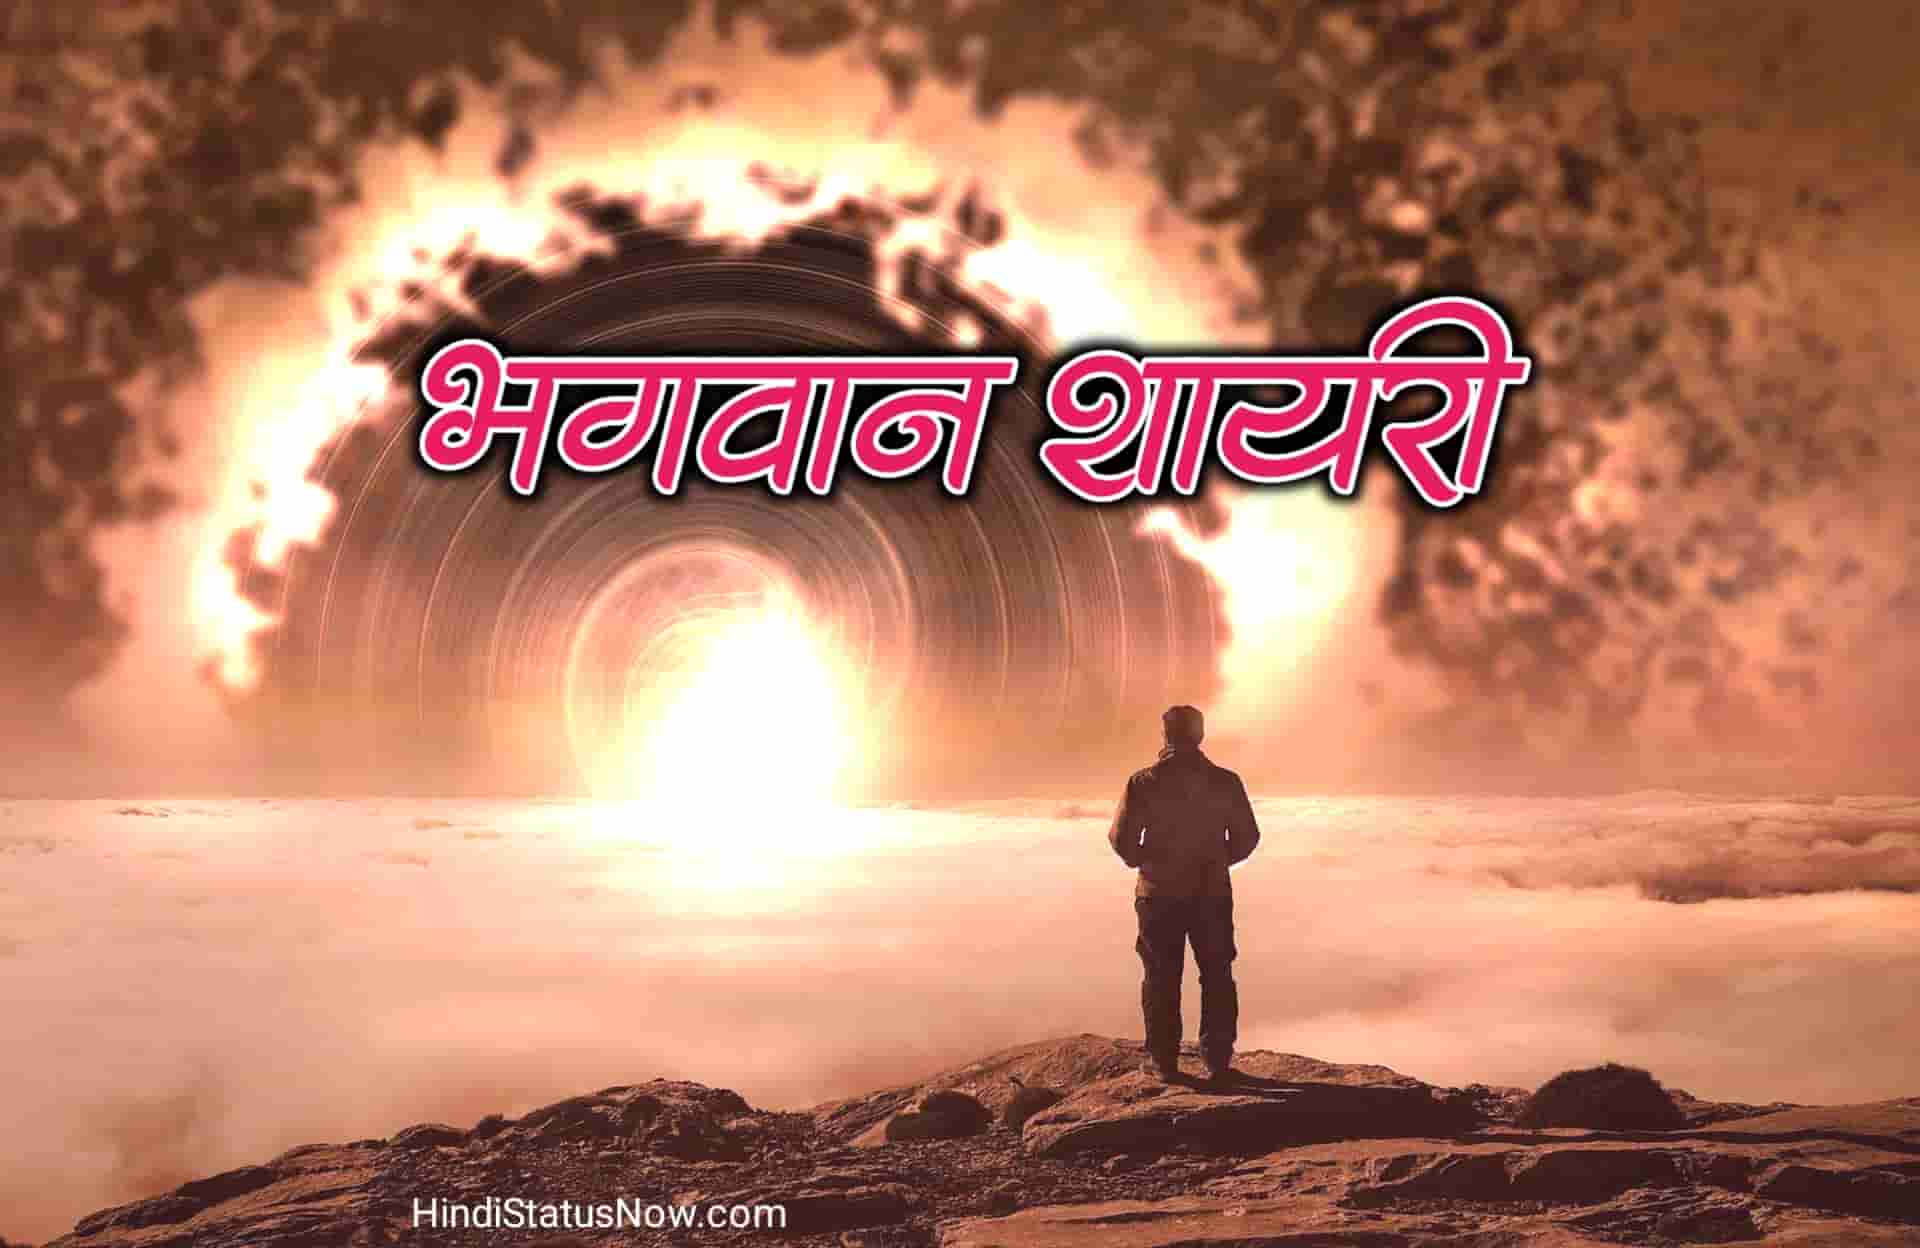 भगवान शायरी ईश्वर | God Shayari In Hindi